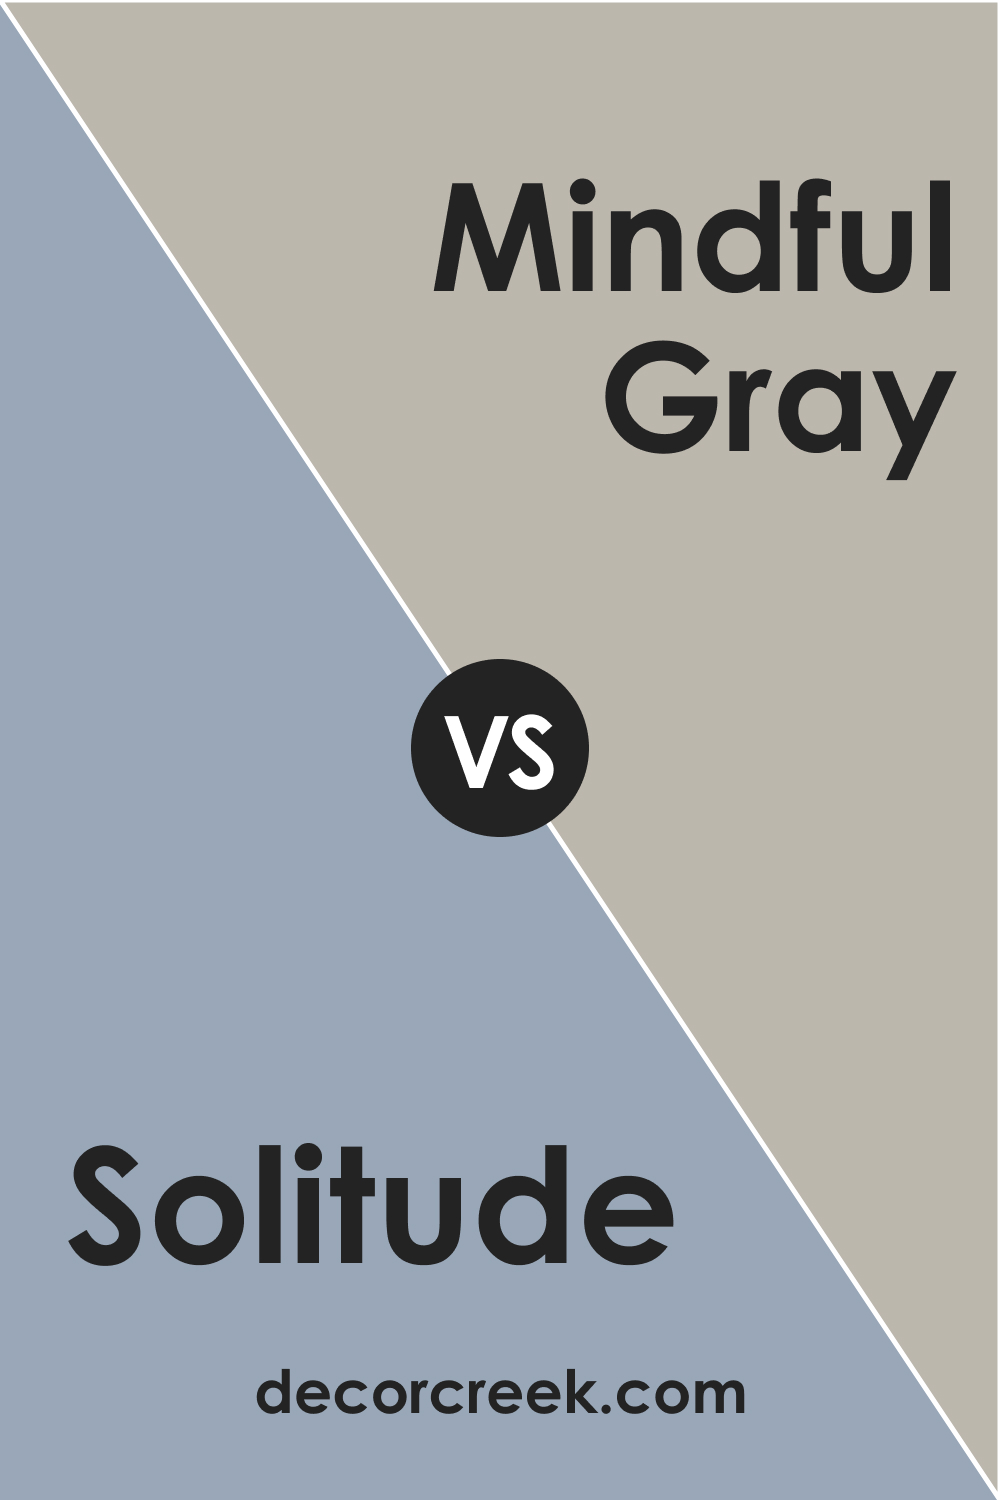 SW 6535 Solitude vs. SW 7016 Mindful Gray